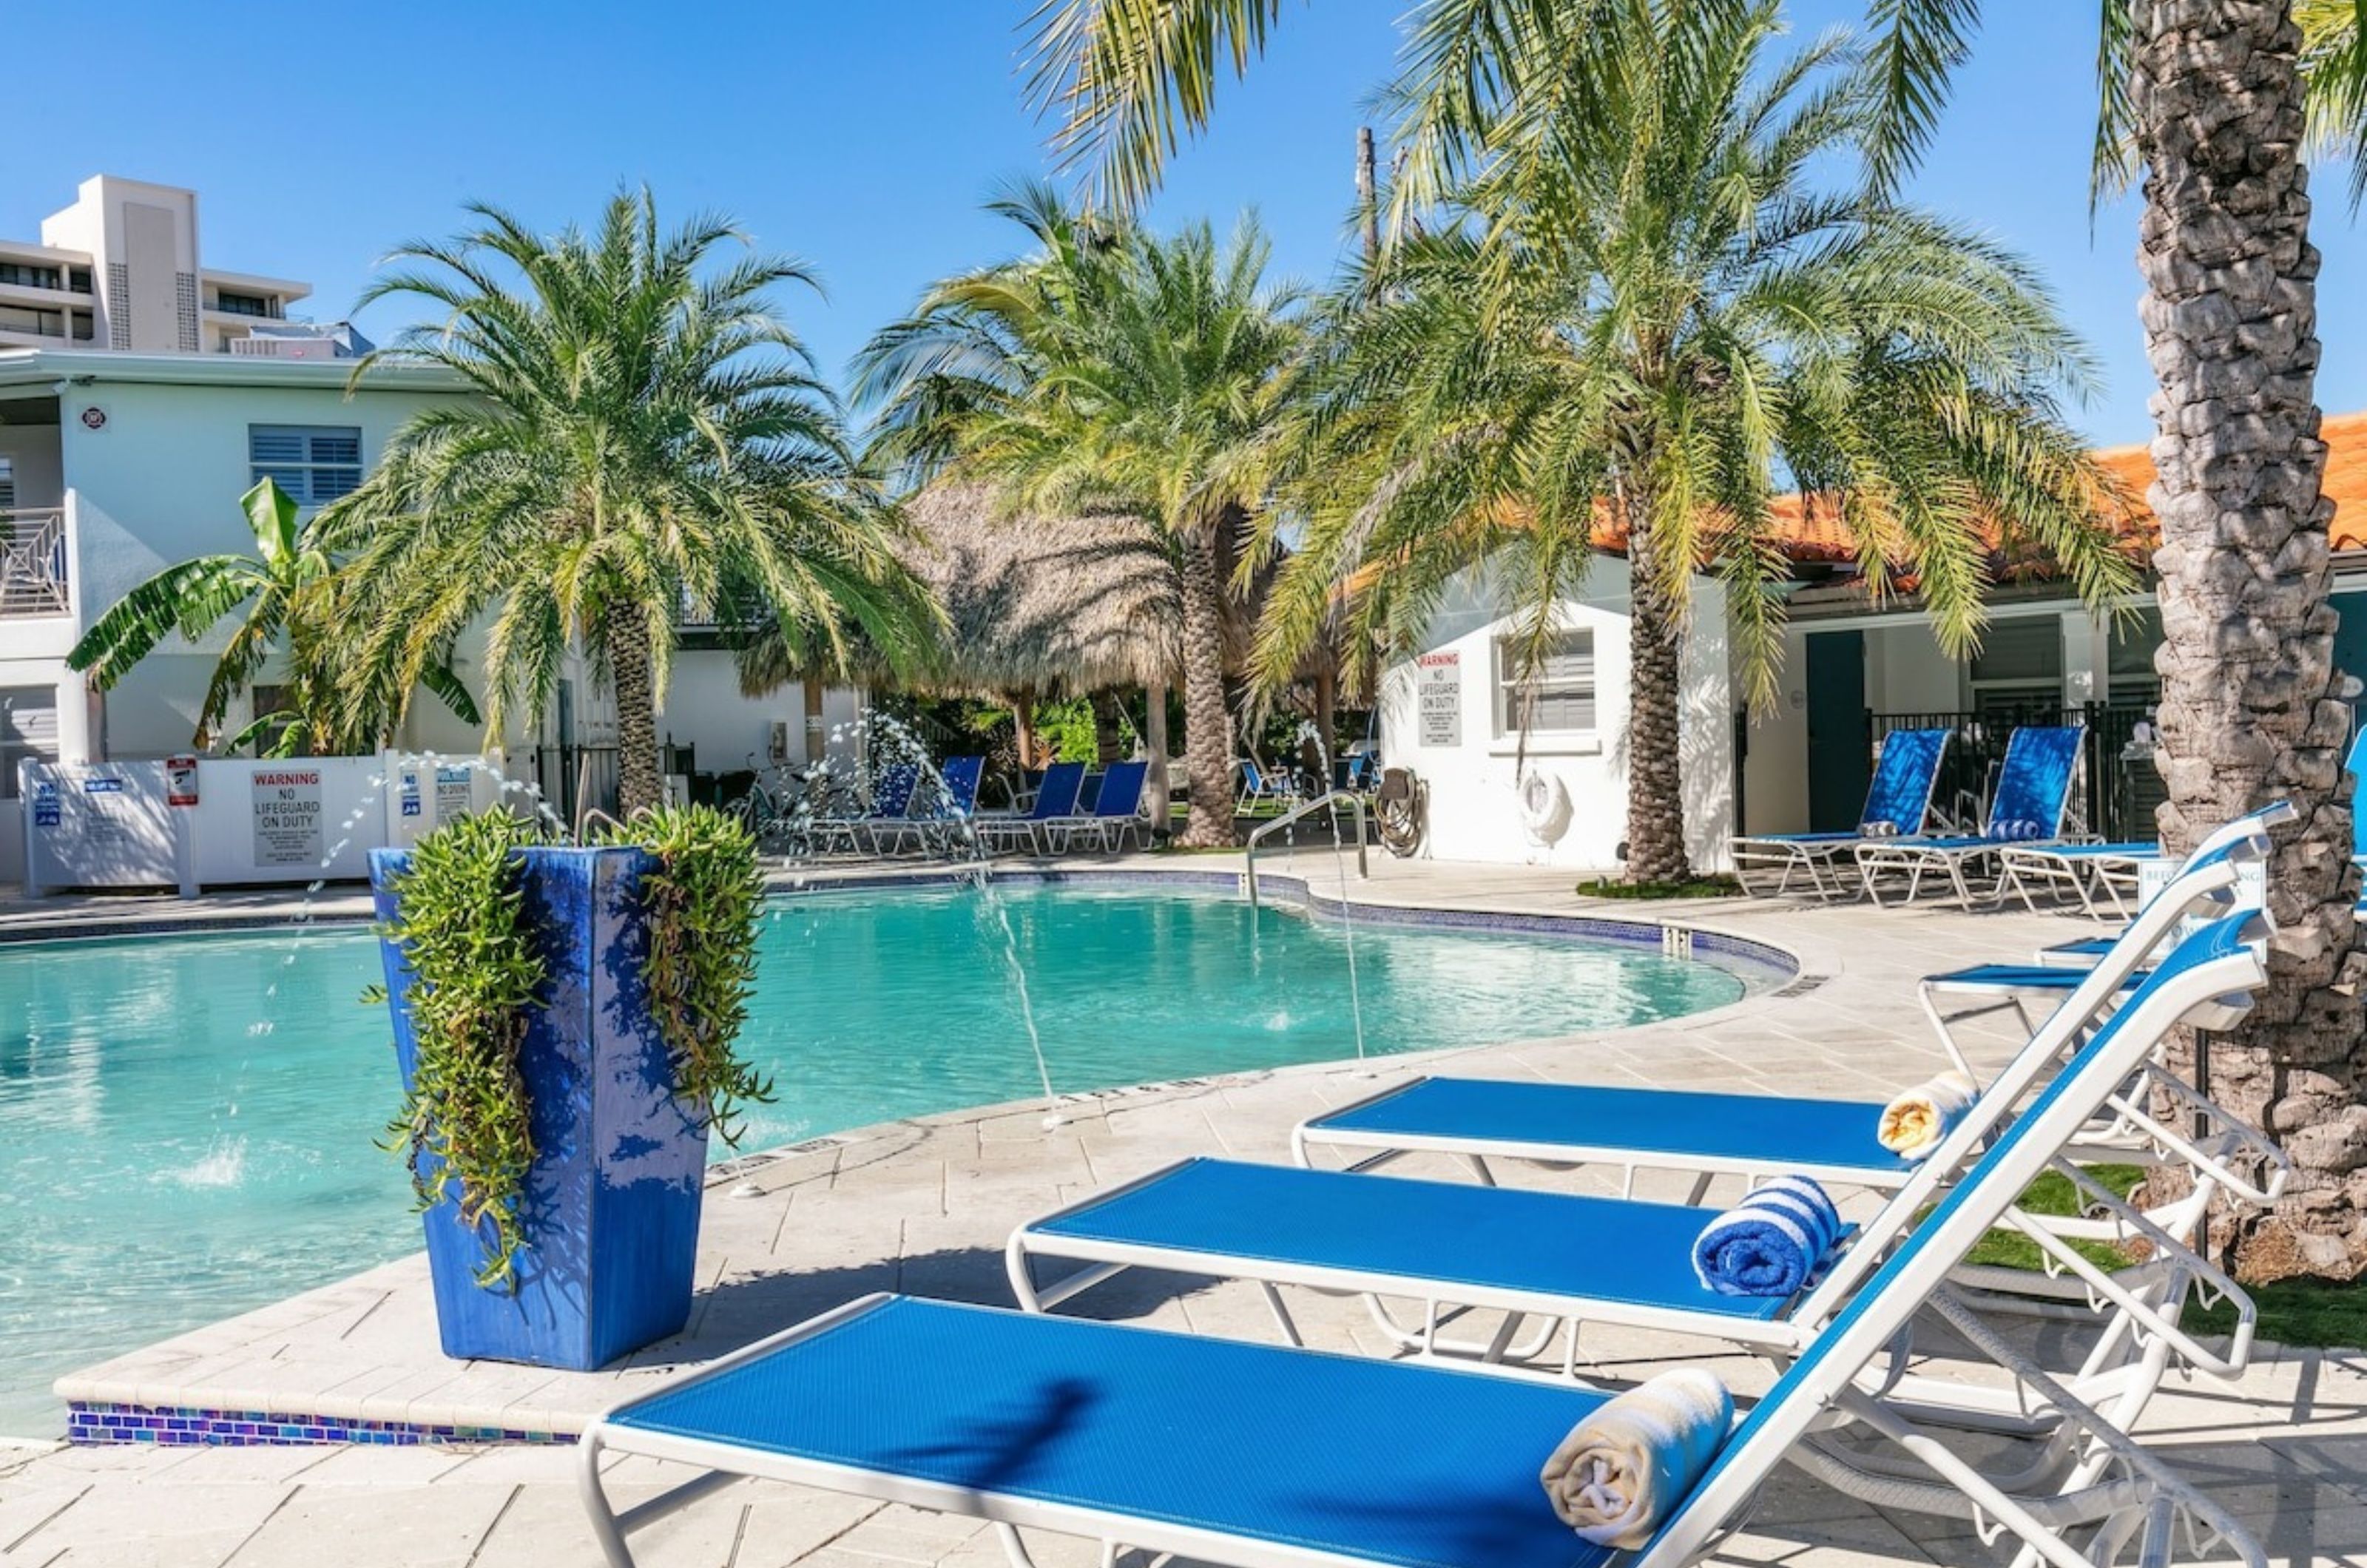 The outdoor pool in front of Siesta Key Beach Resort and Suites in Siesta Key Florida